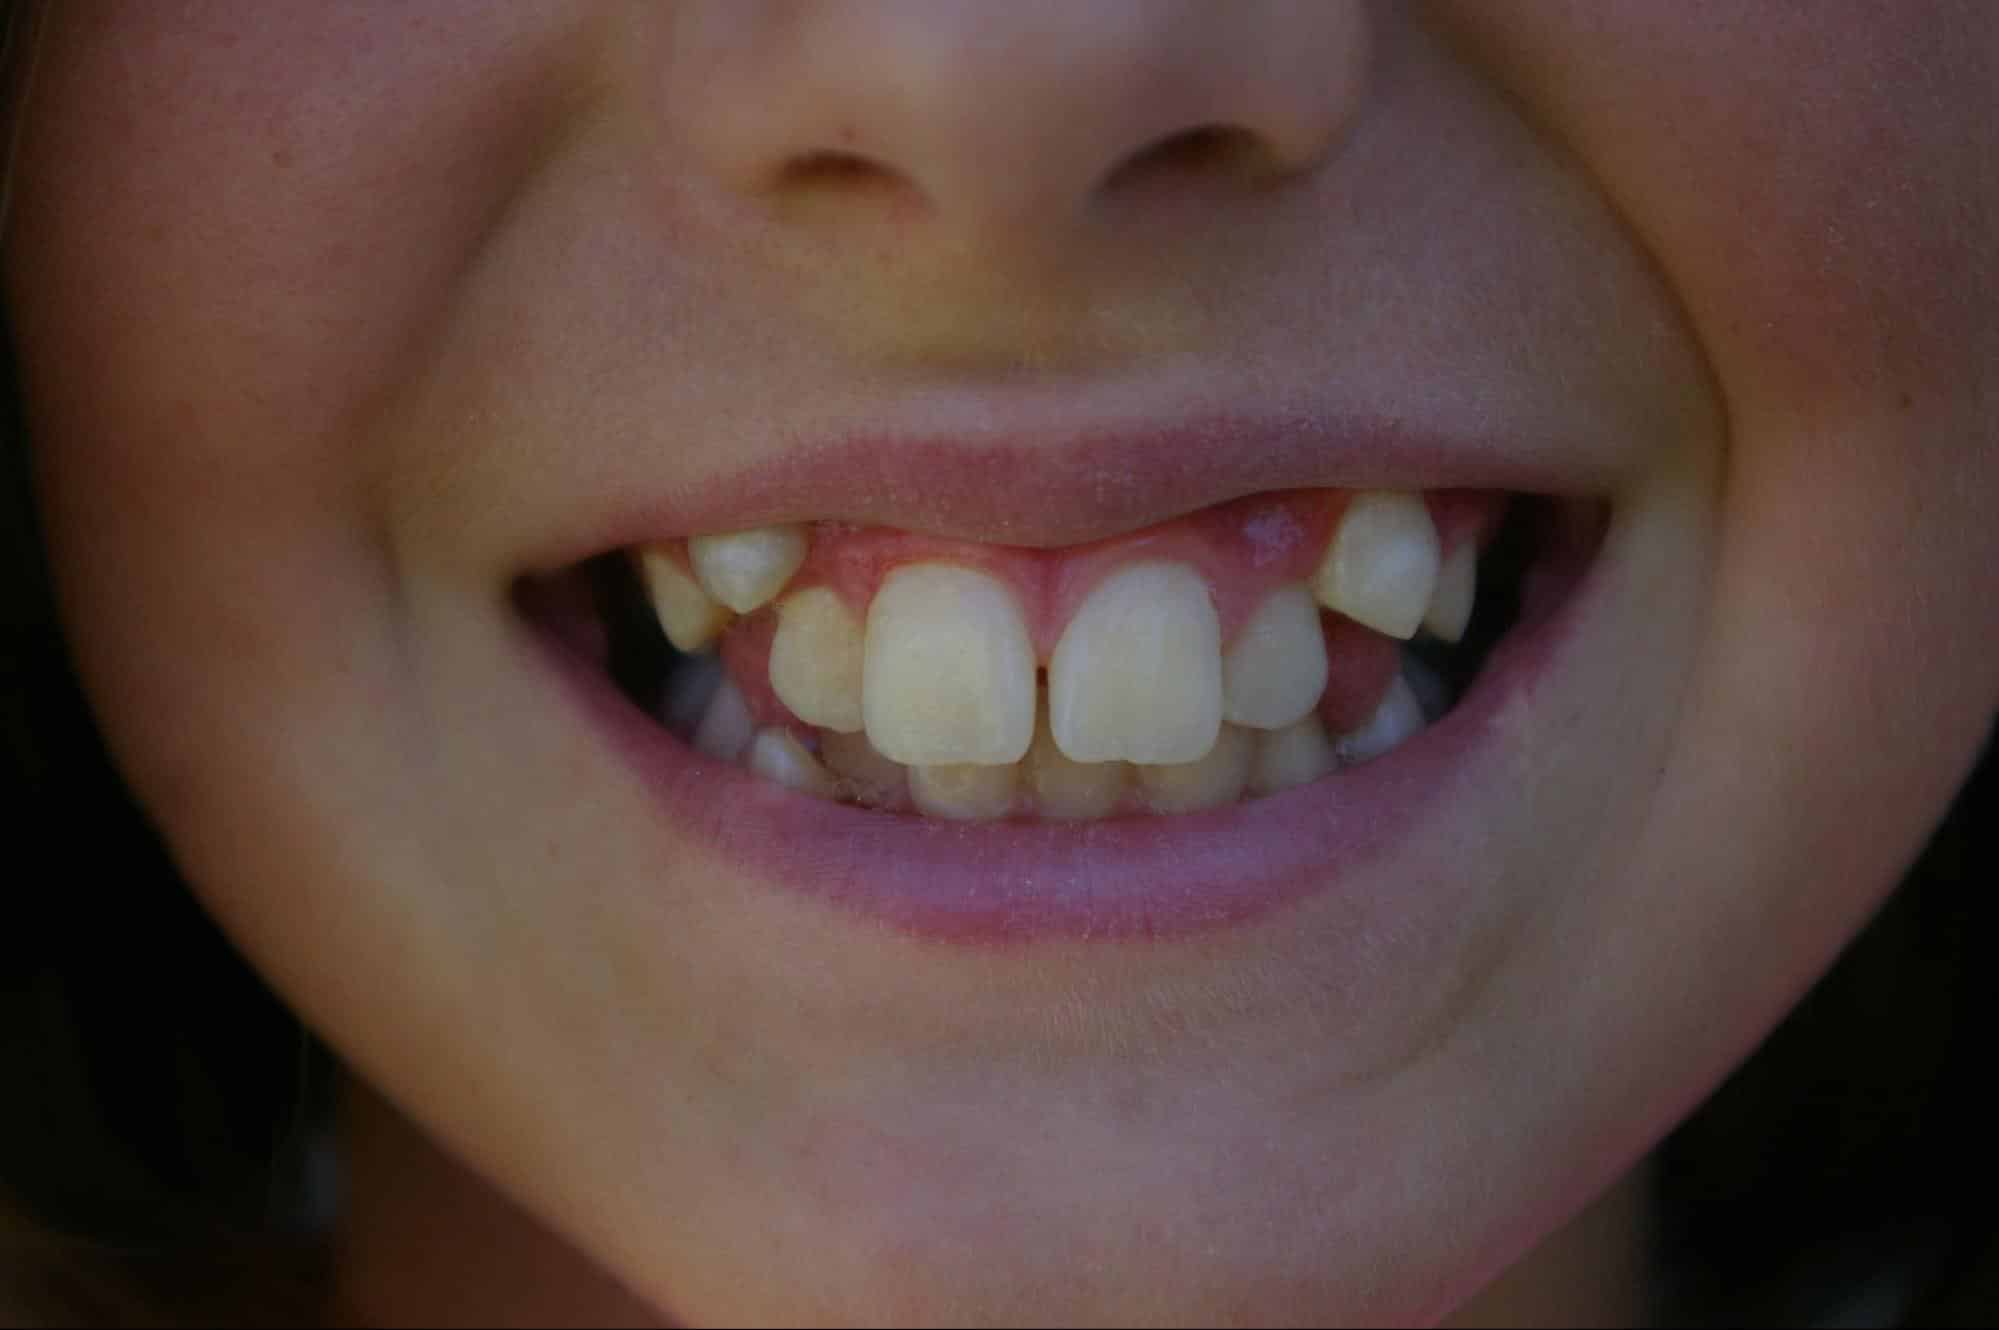 Child who needs braces